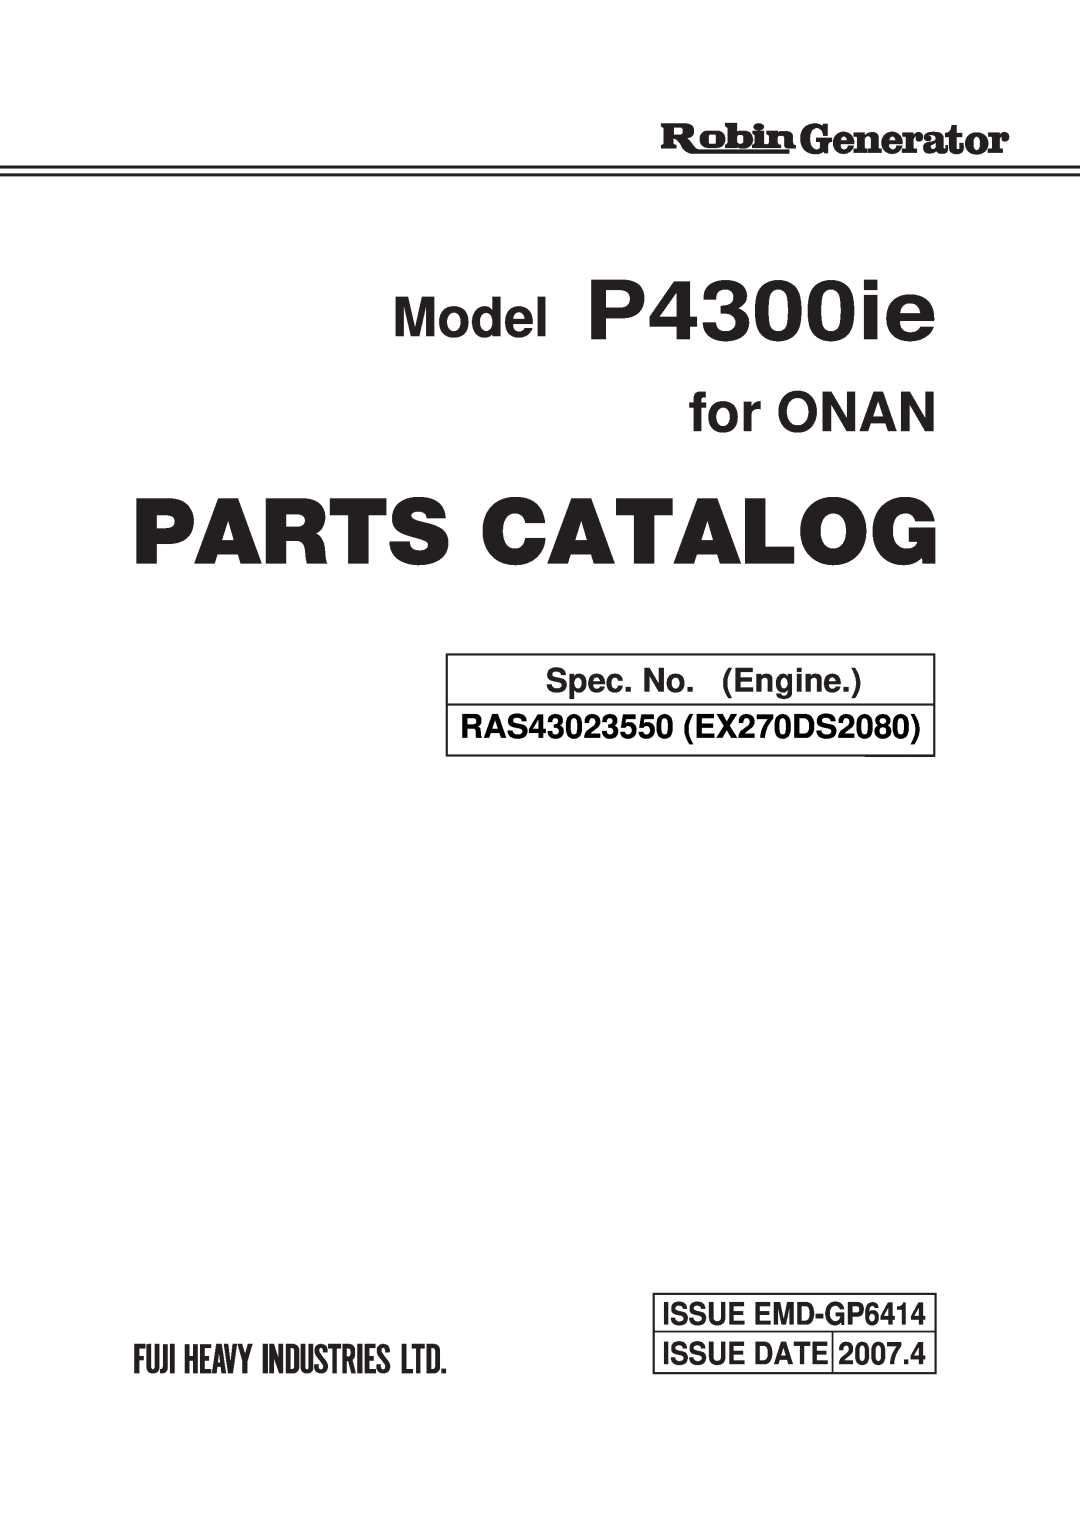 Subaru Robin Power Products manual Model P4300ie, for ONAN, Spec. No. Engine, RAS43023550 EX270DS2080 